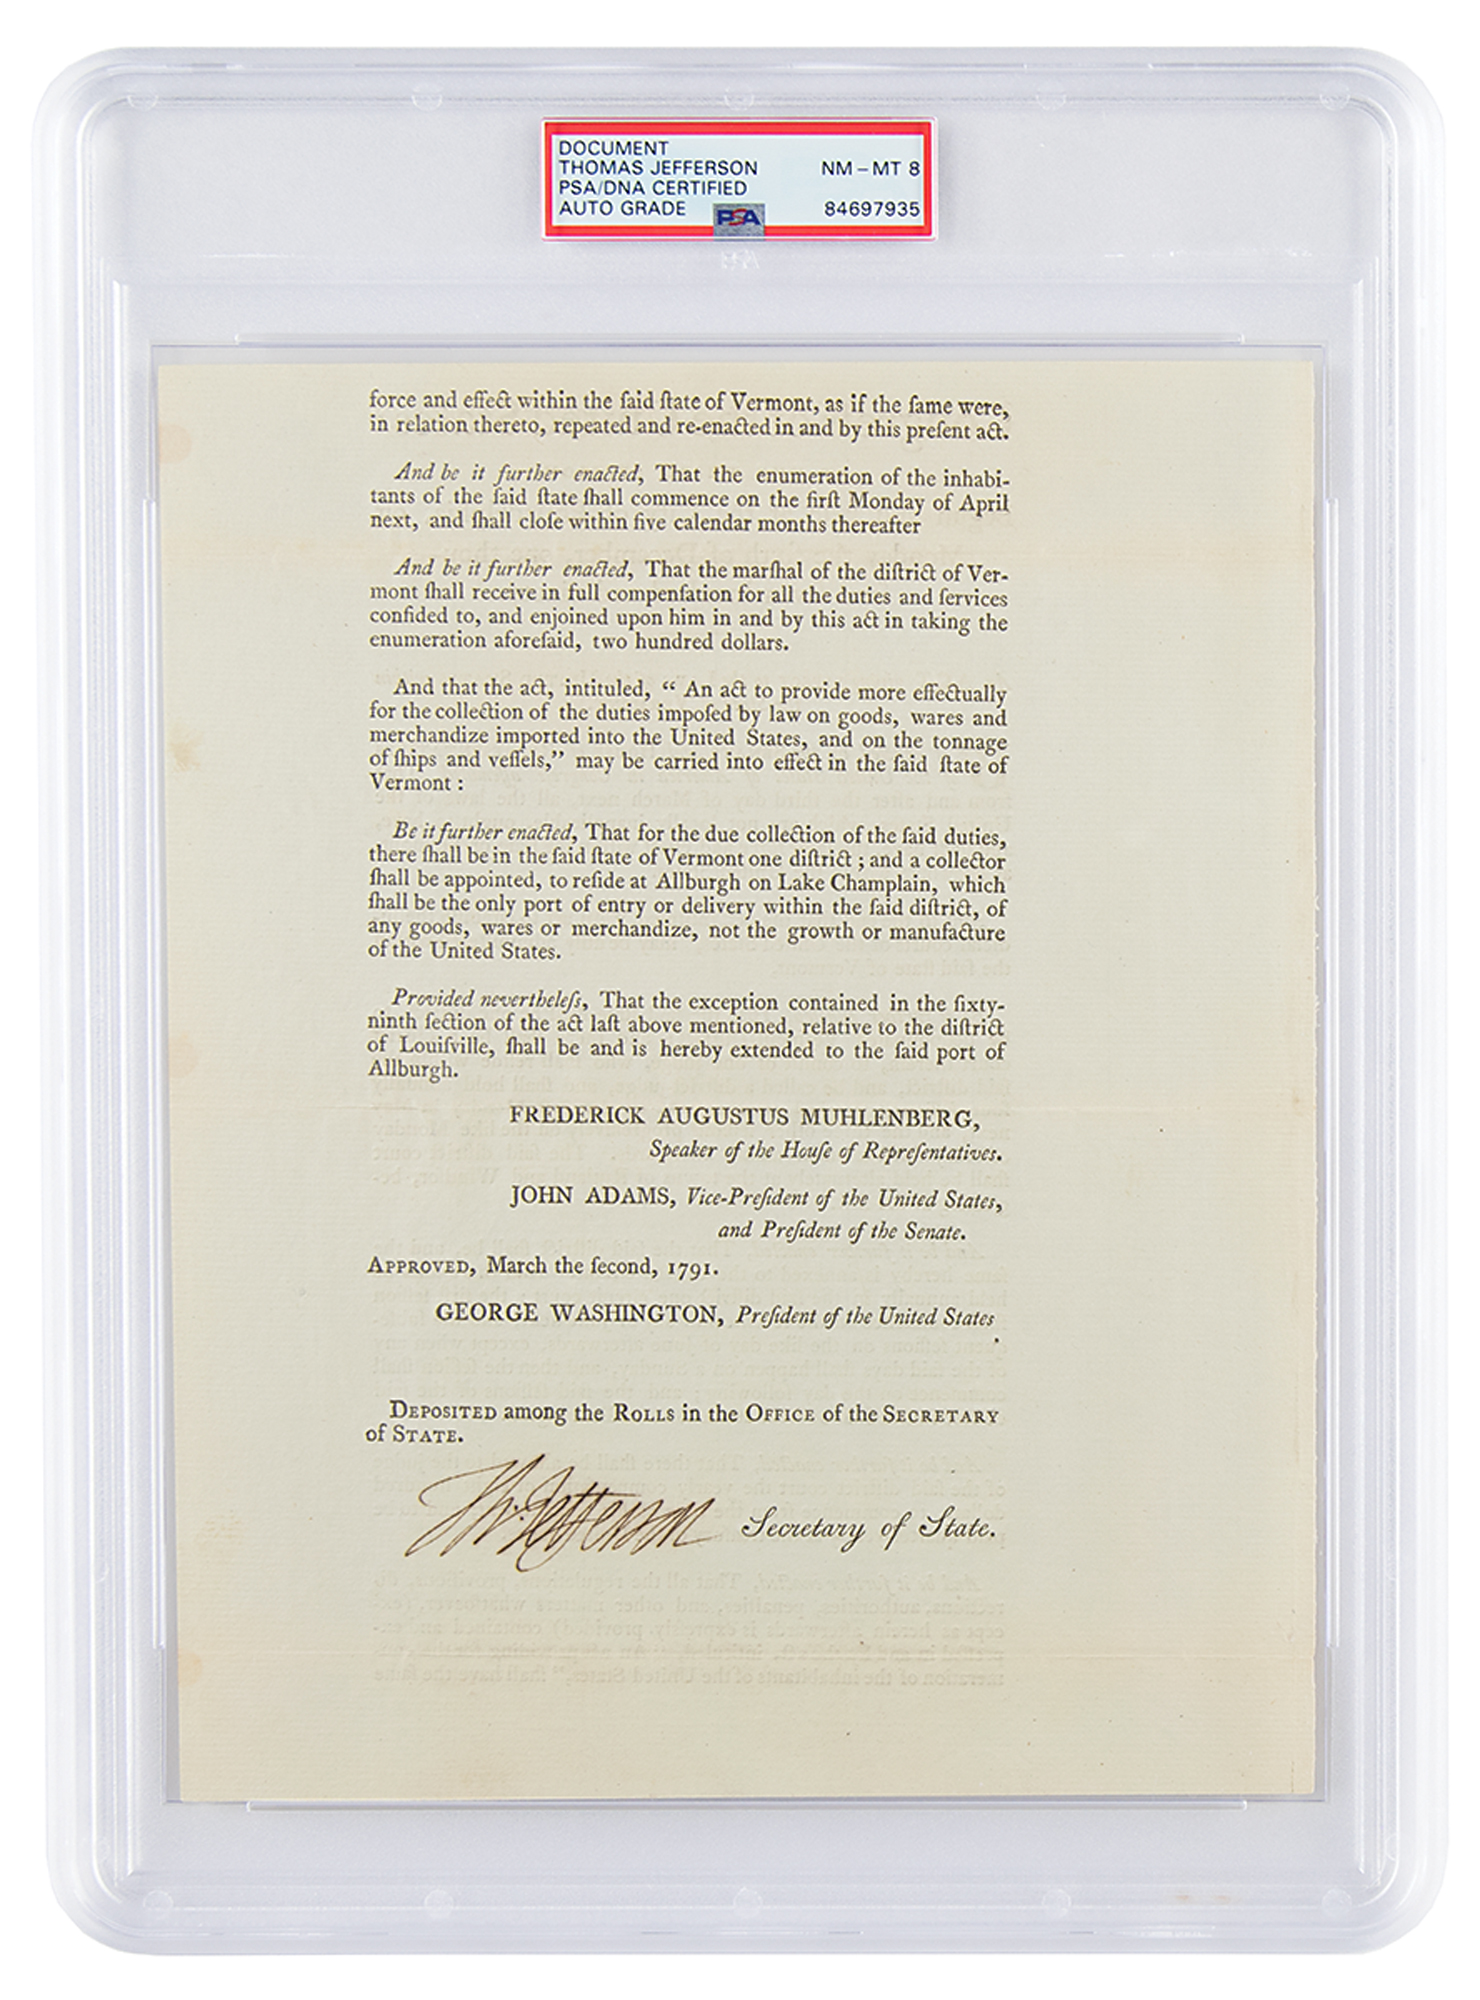 Lot #7006 Thomas Jefferson Document Signed as President - PSA NM-MT 8